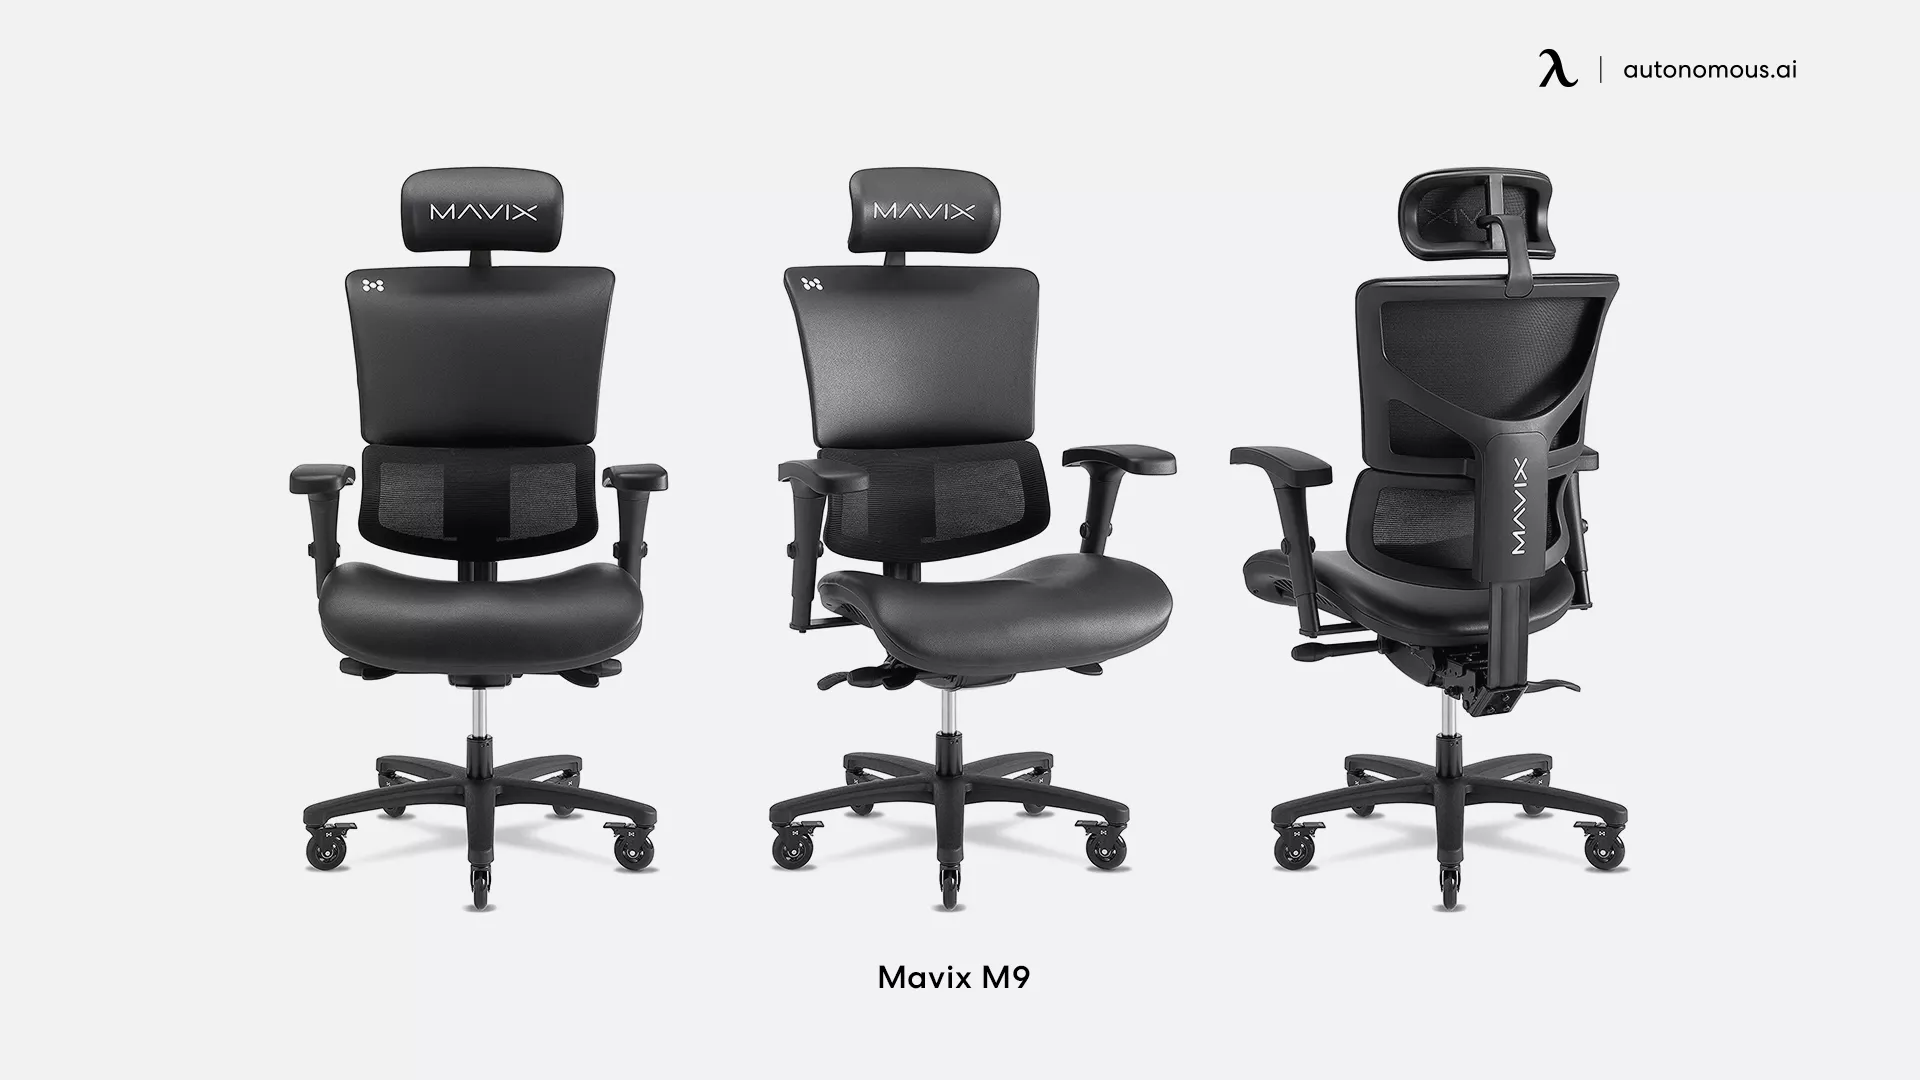 Mavix M9 mesh office chair